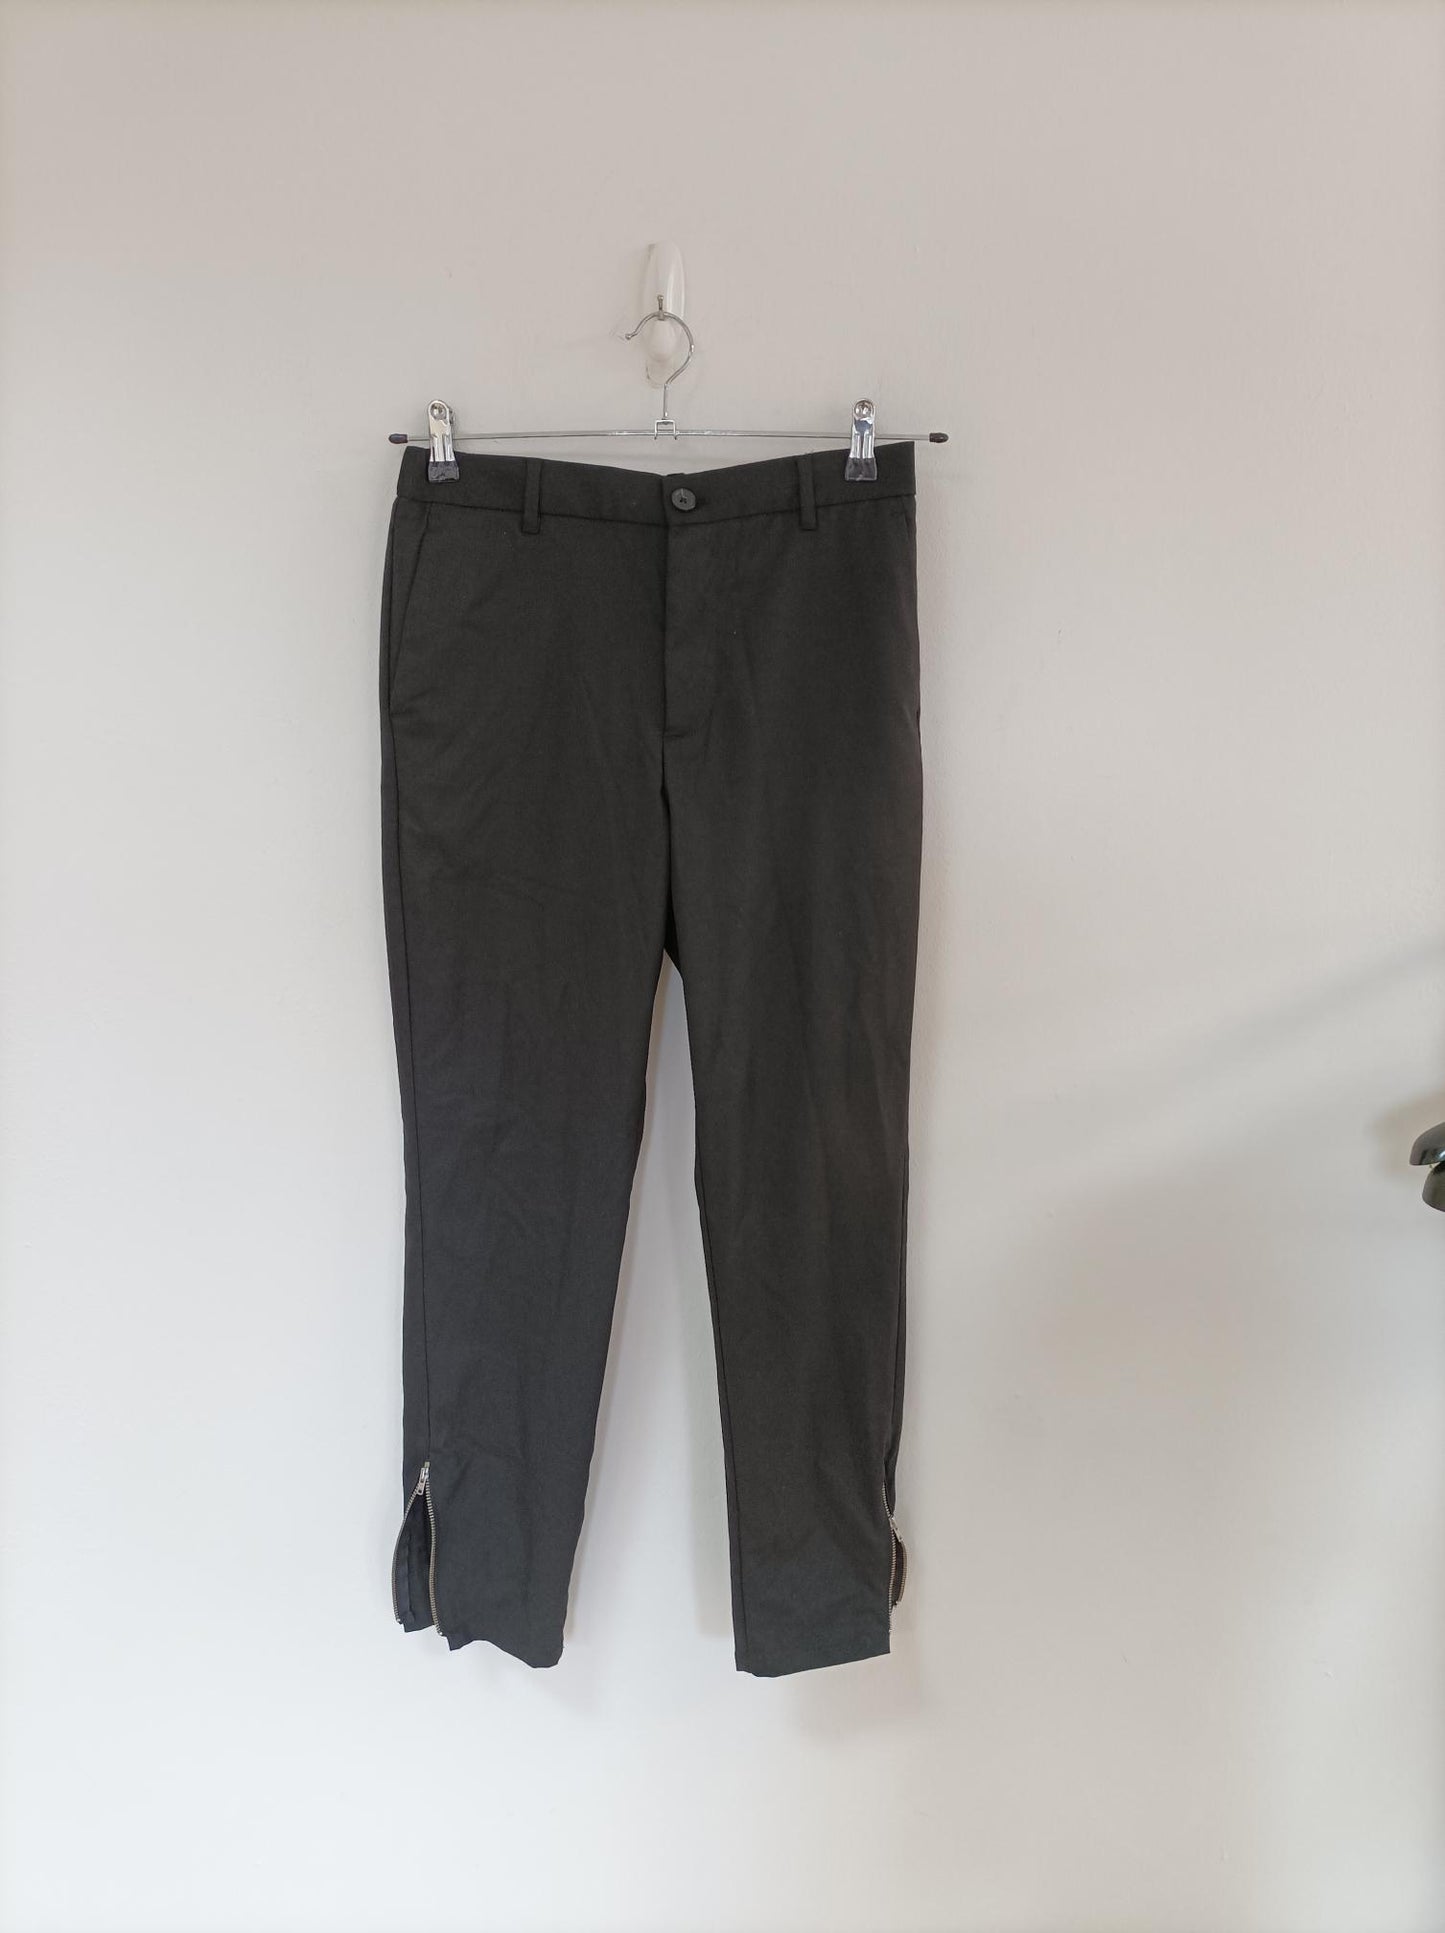 Black high rise skinny cropped trousers with zipper slit detail, Bershka, Size 12 (Viscose, Polyester, Elastane)